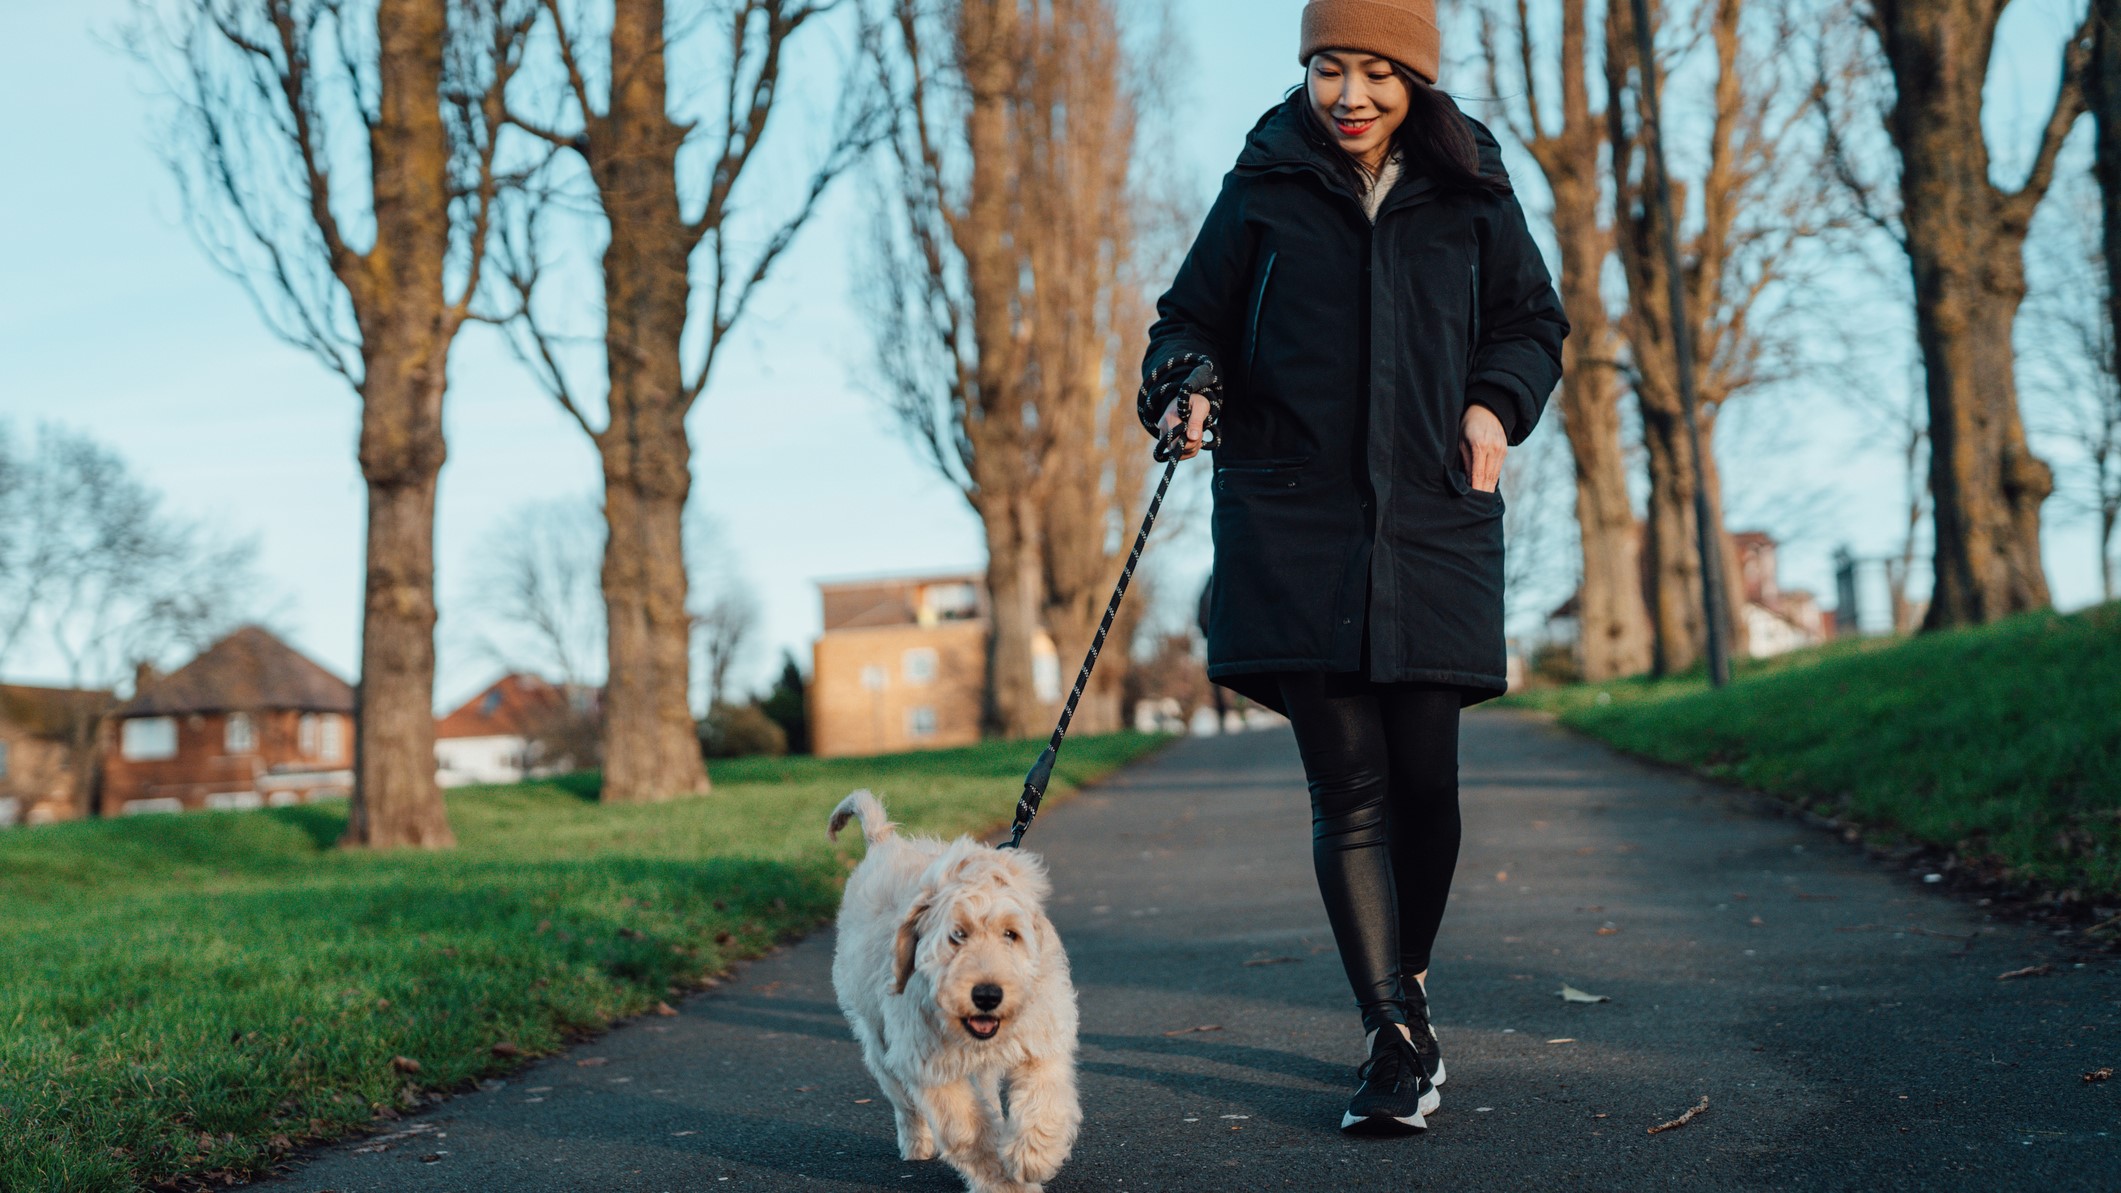 a photo of a woman walking a dog